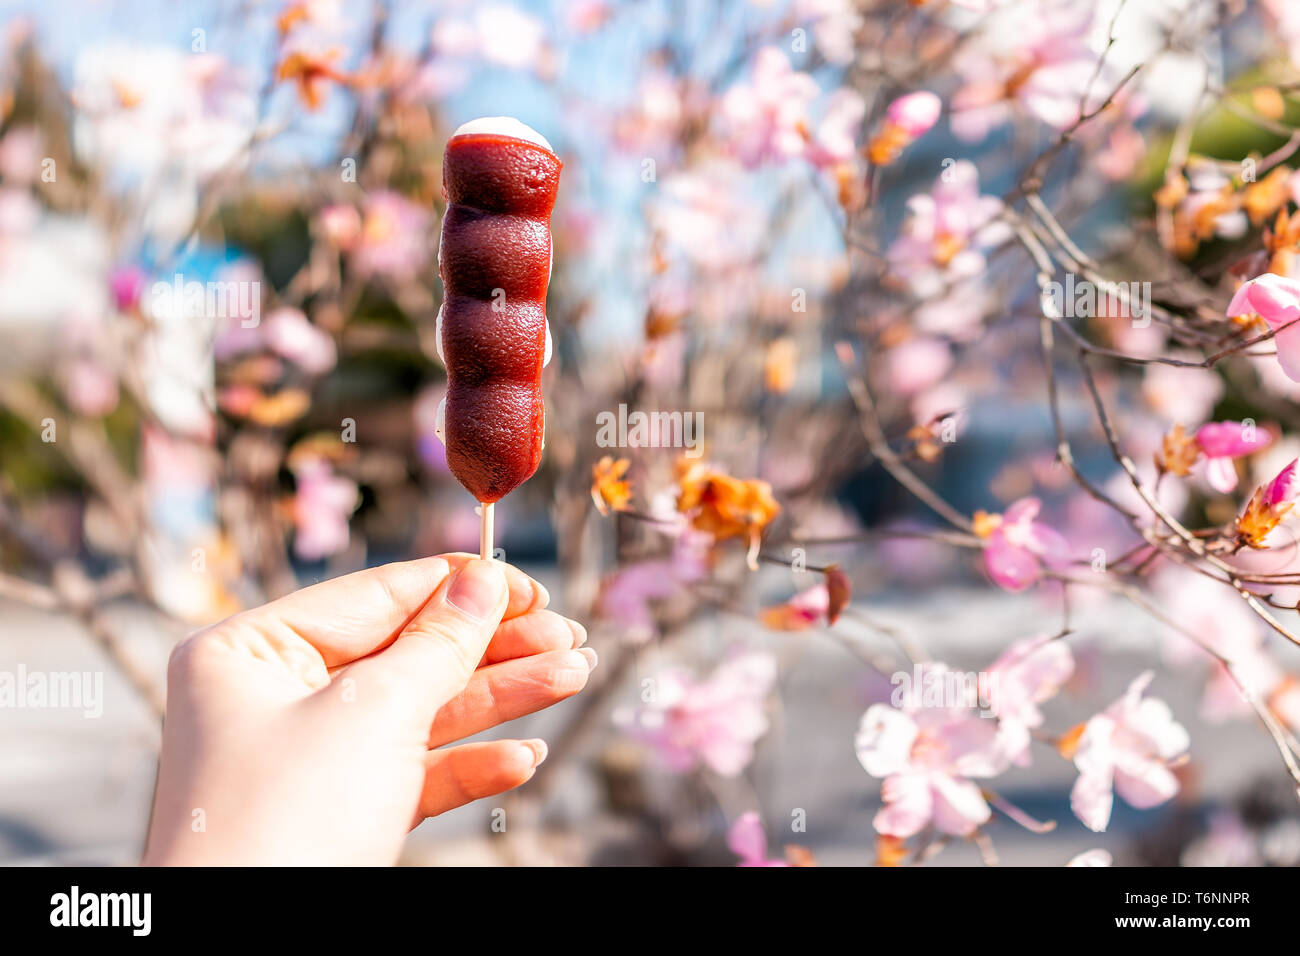 Pink cherry blossom or plum tree flower petals in spring springtime in Nikko, Japan with hand holding adzuki dango dessert Stock Photo